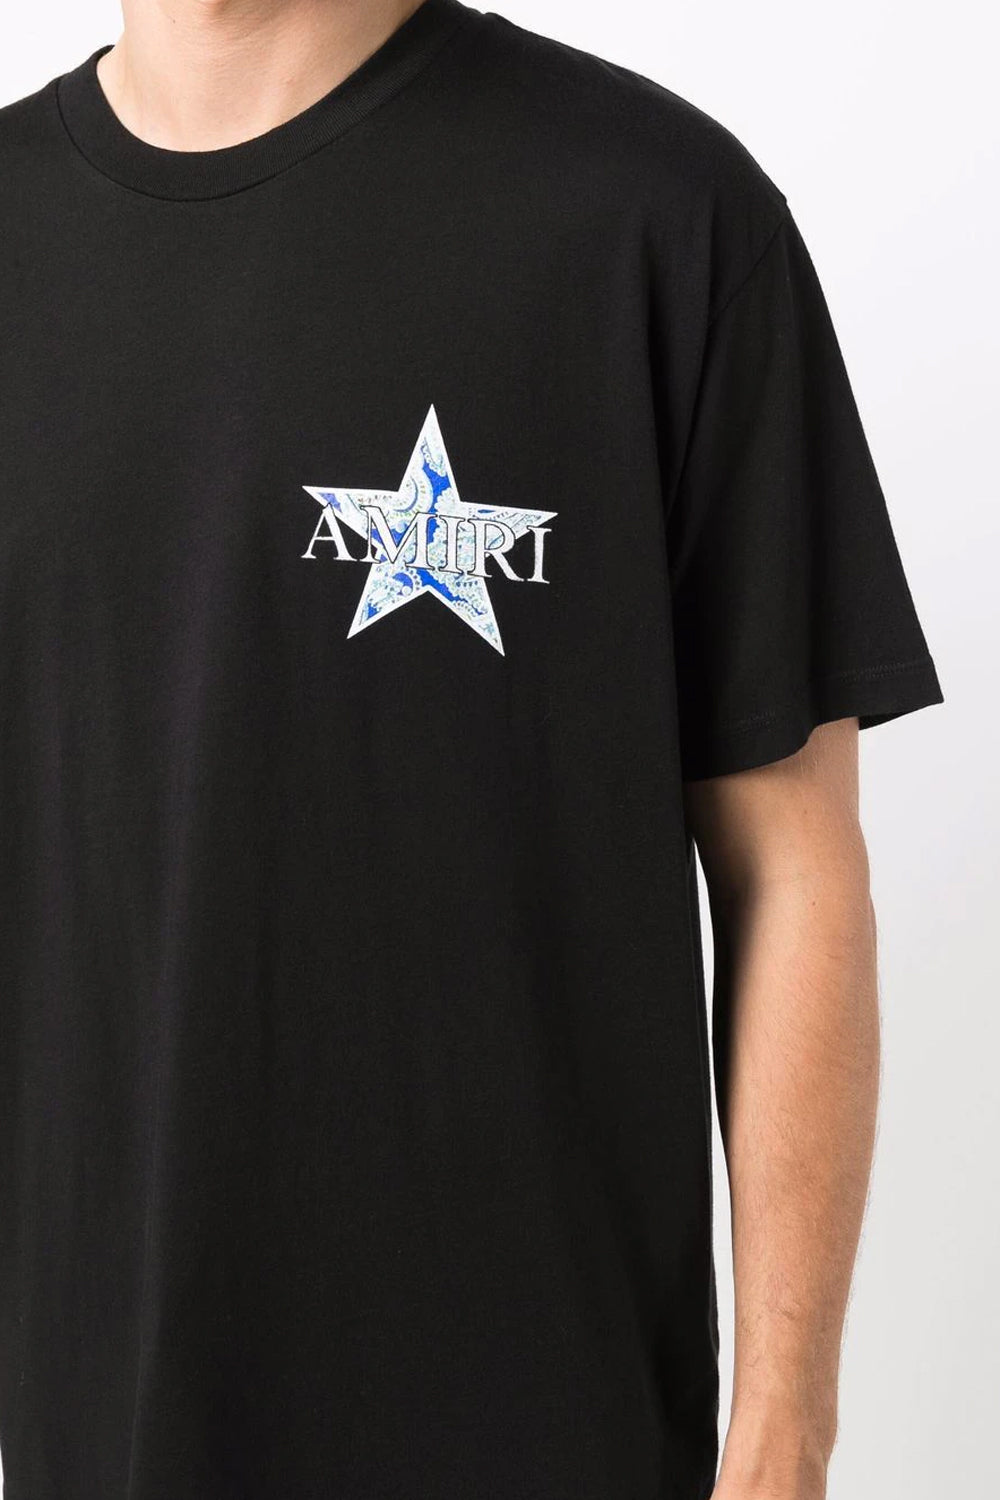 Amiri star black T-shirt